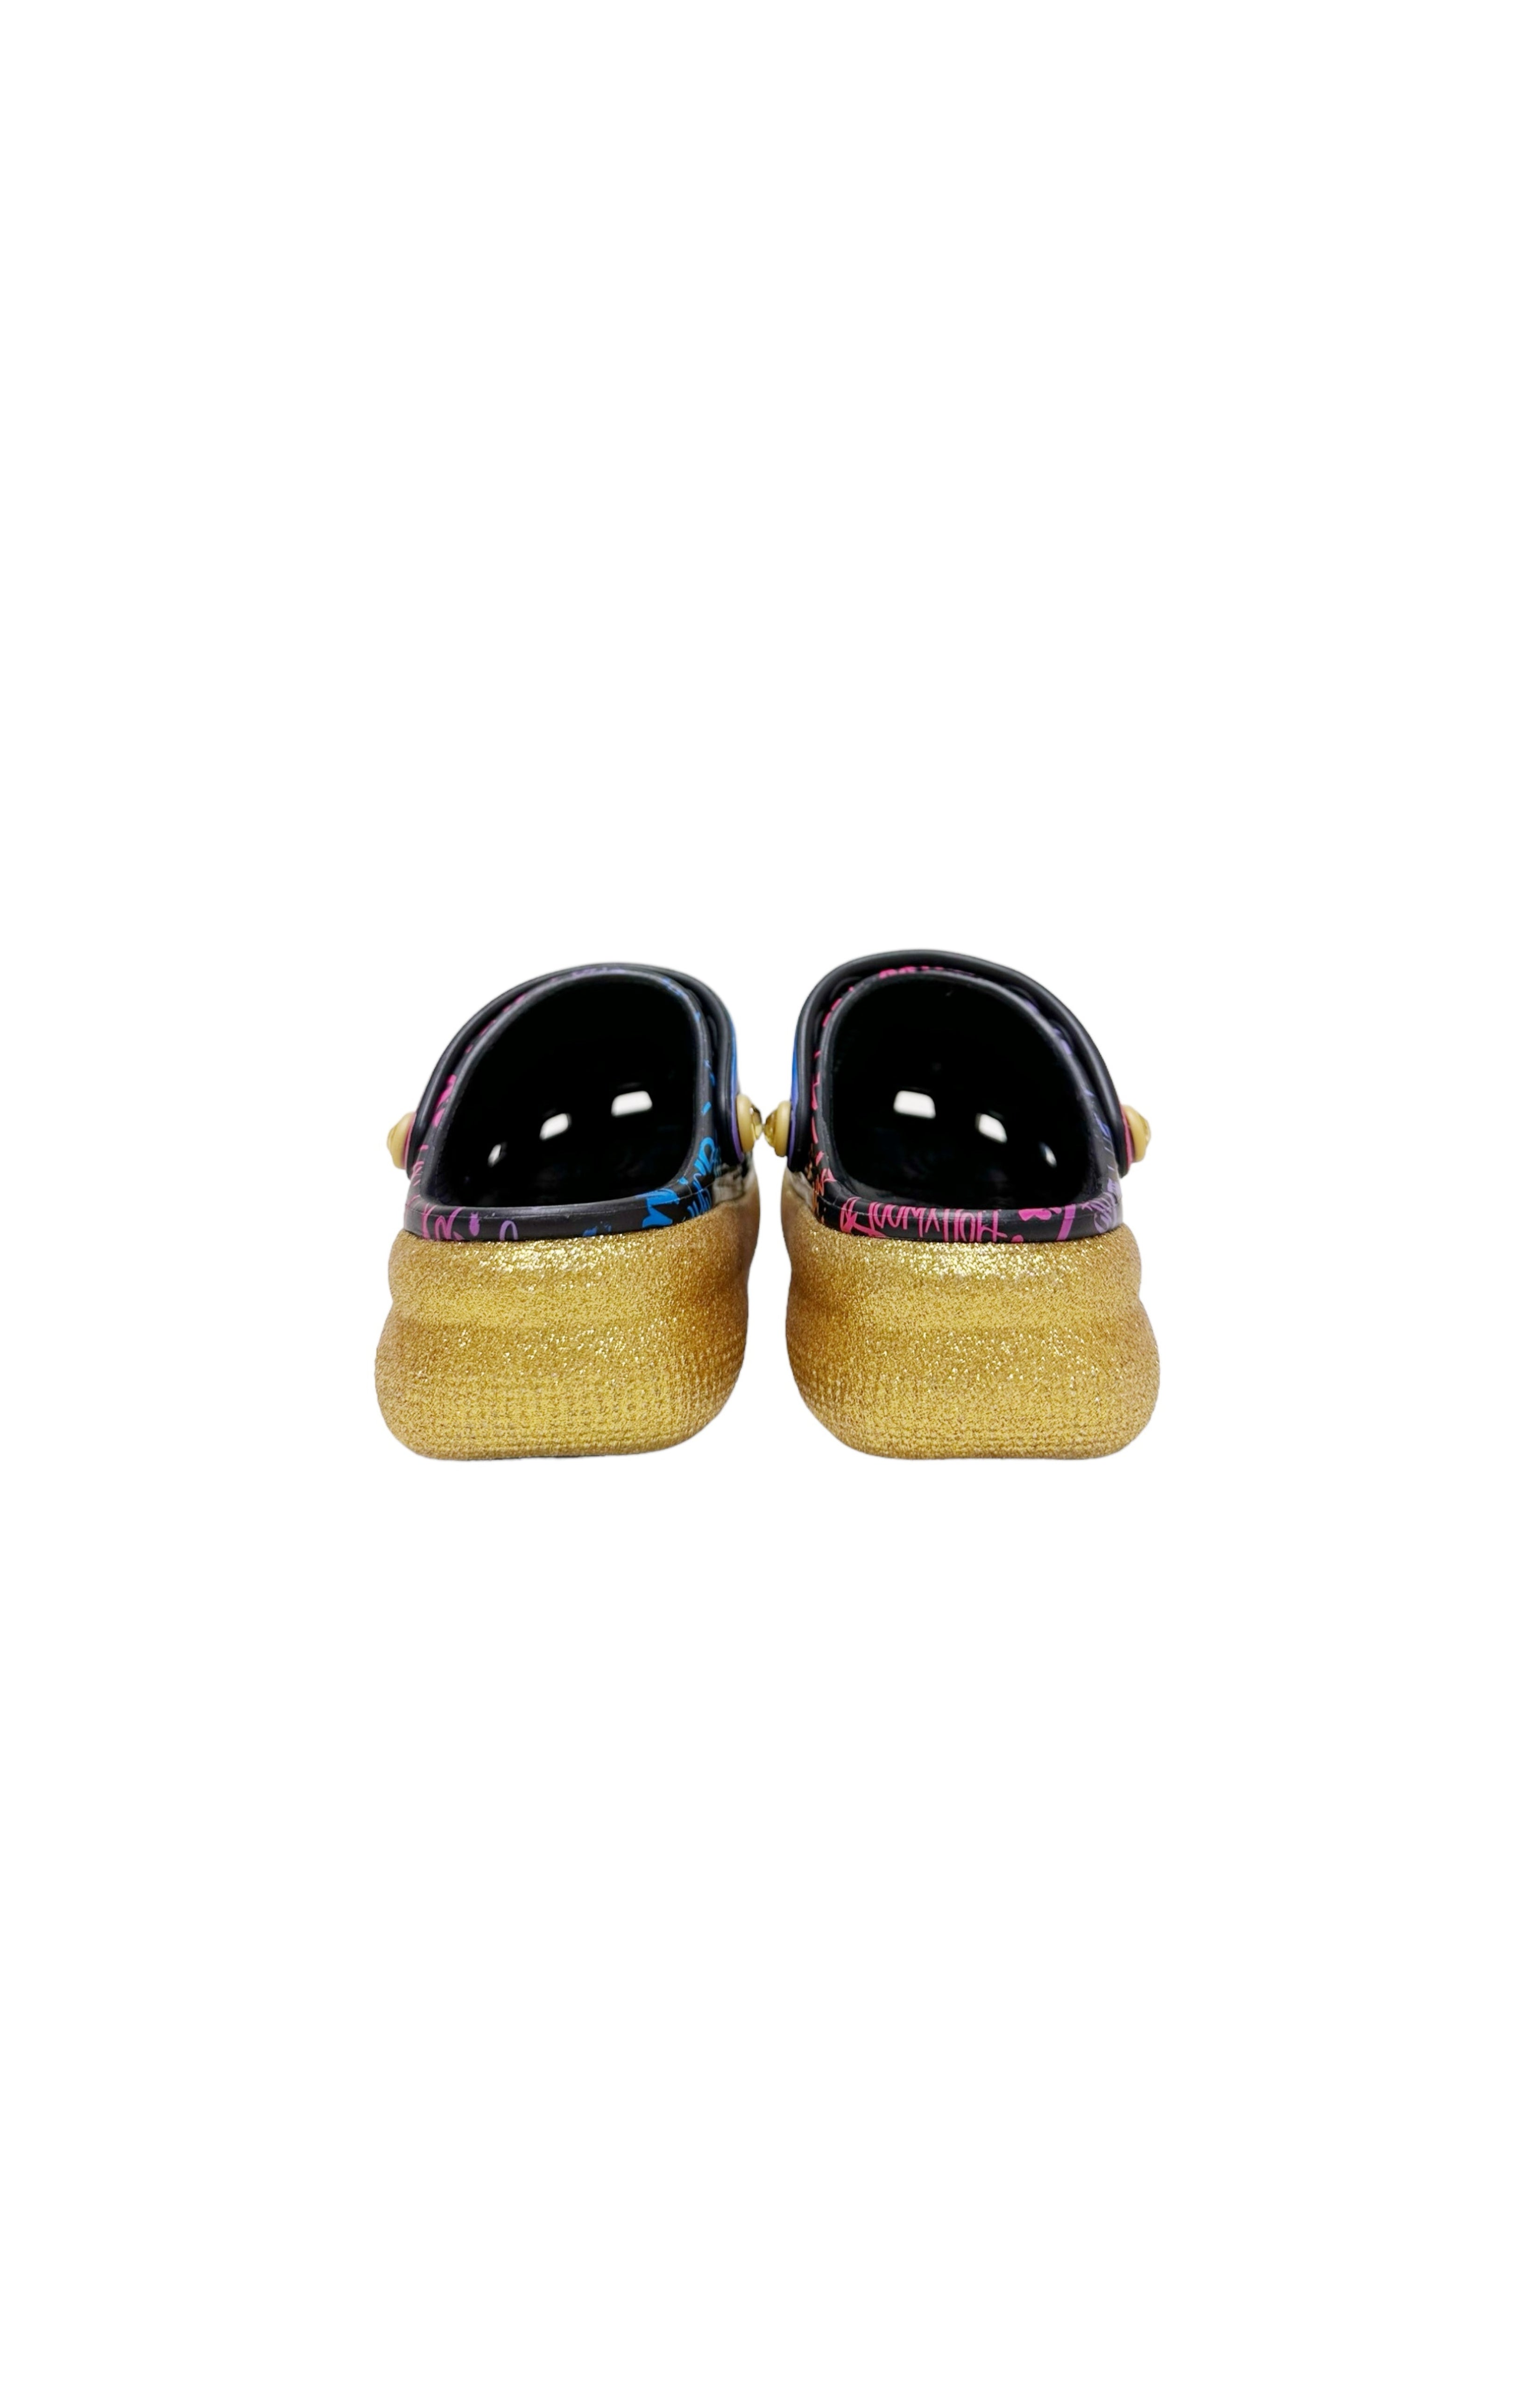 CROCS Shoes Size: Toddler US 12